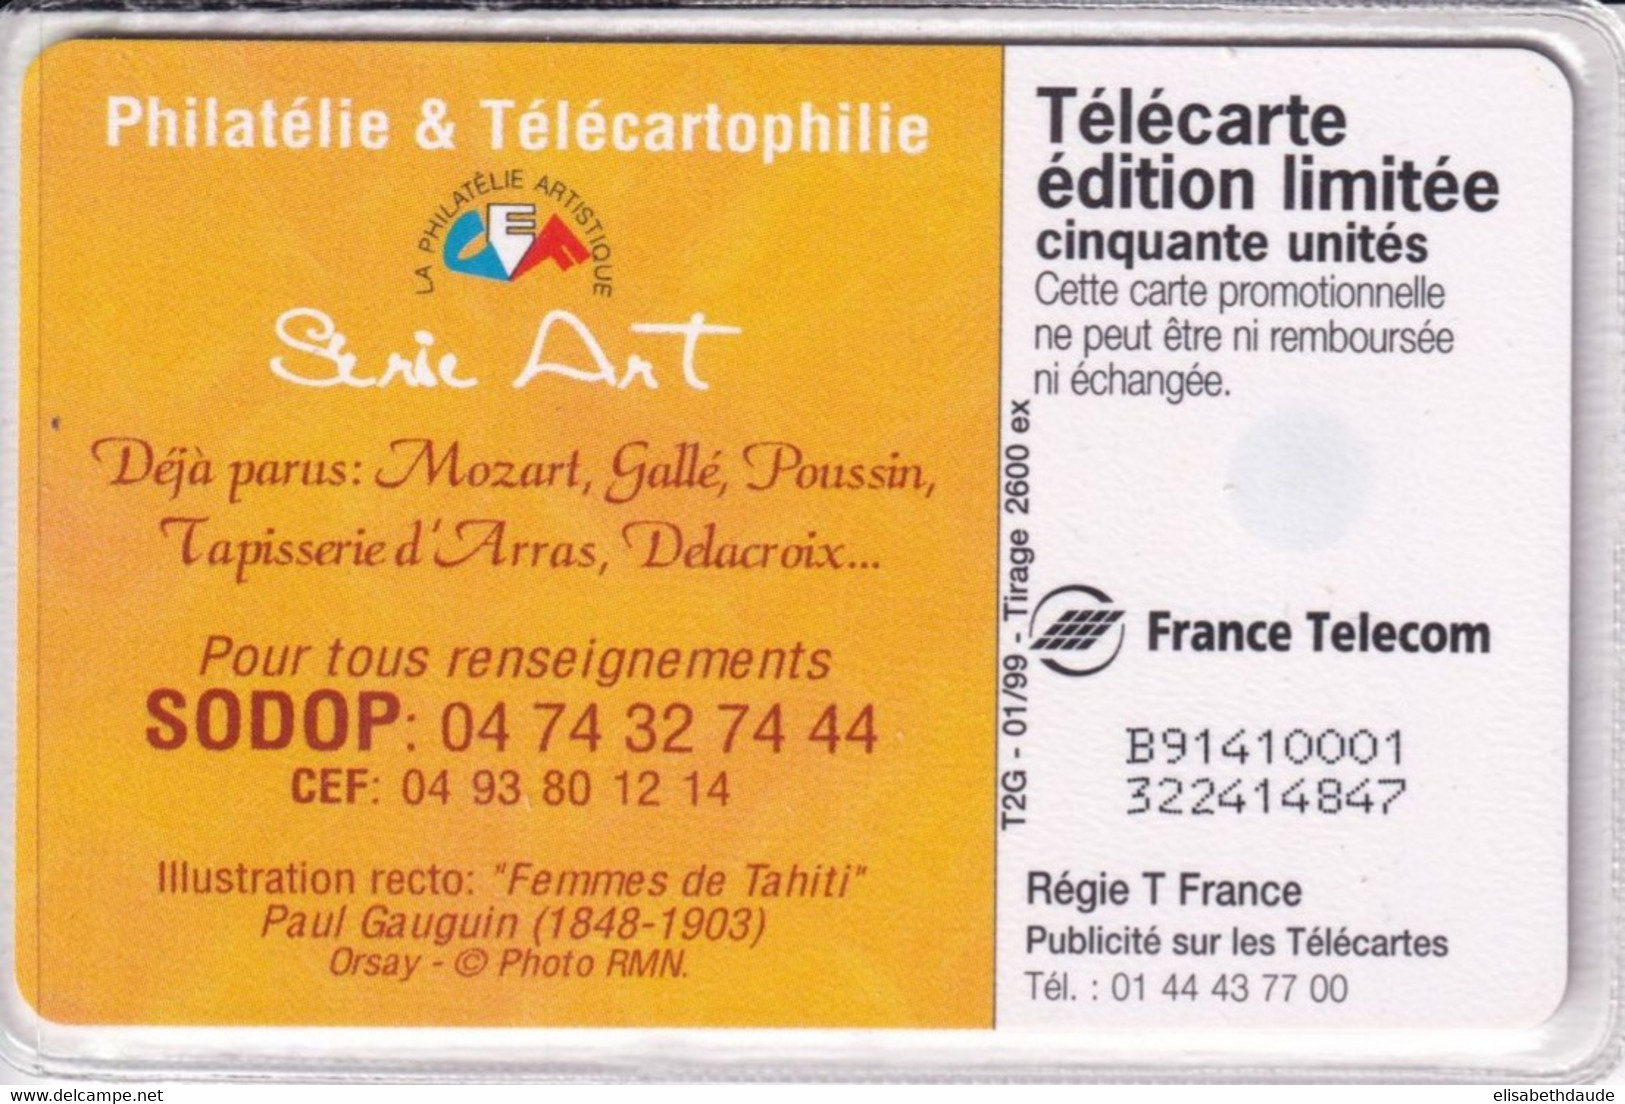 1999 - TELECARTE 50 T2G - TIRAGE 2600 EX. NEUVE - GAUGUIN "FEMMES DE TAHITI" - Schilderijen